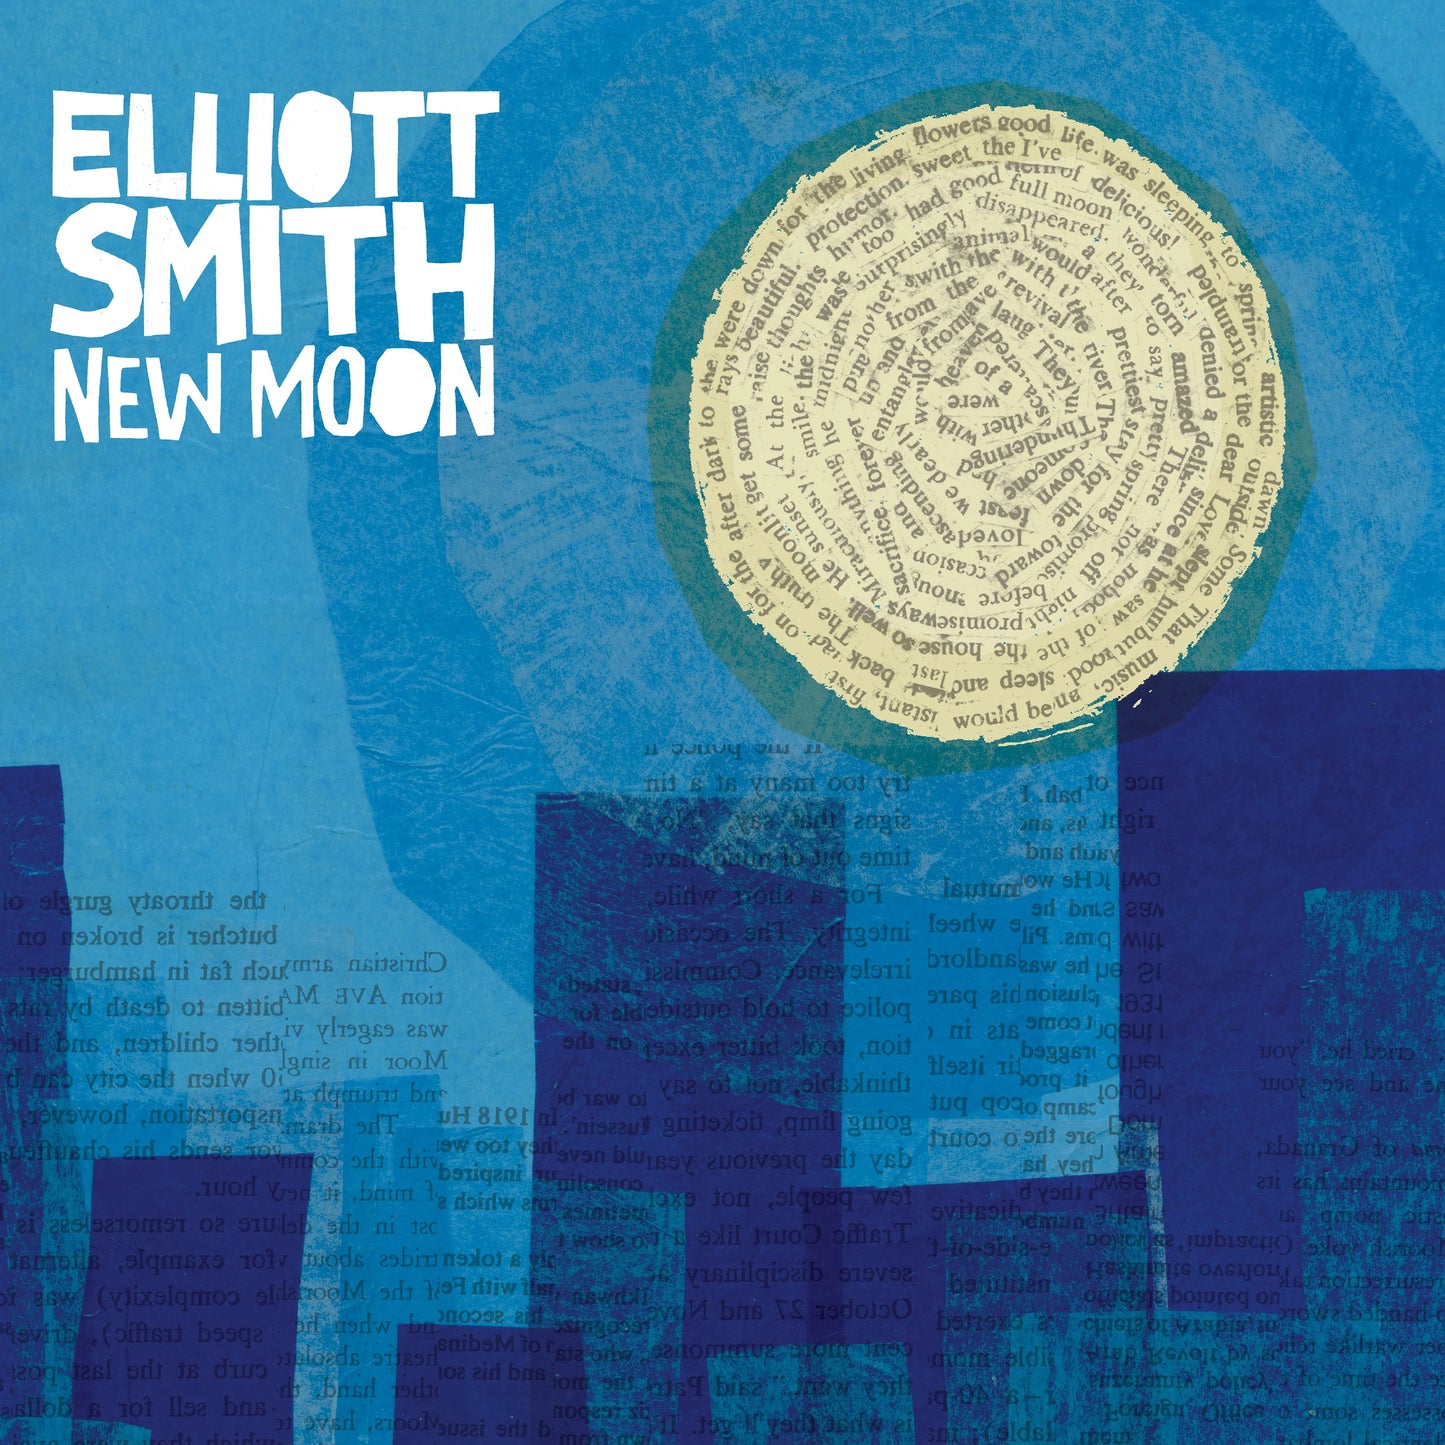 Elliot Smith - New Moon | Buy the Vinyl LP from Flying Nun Records